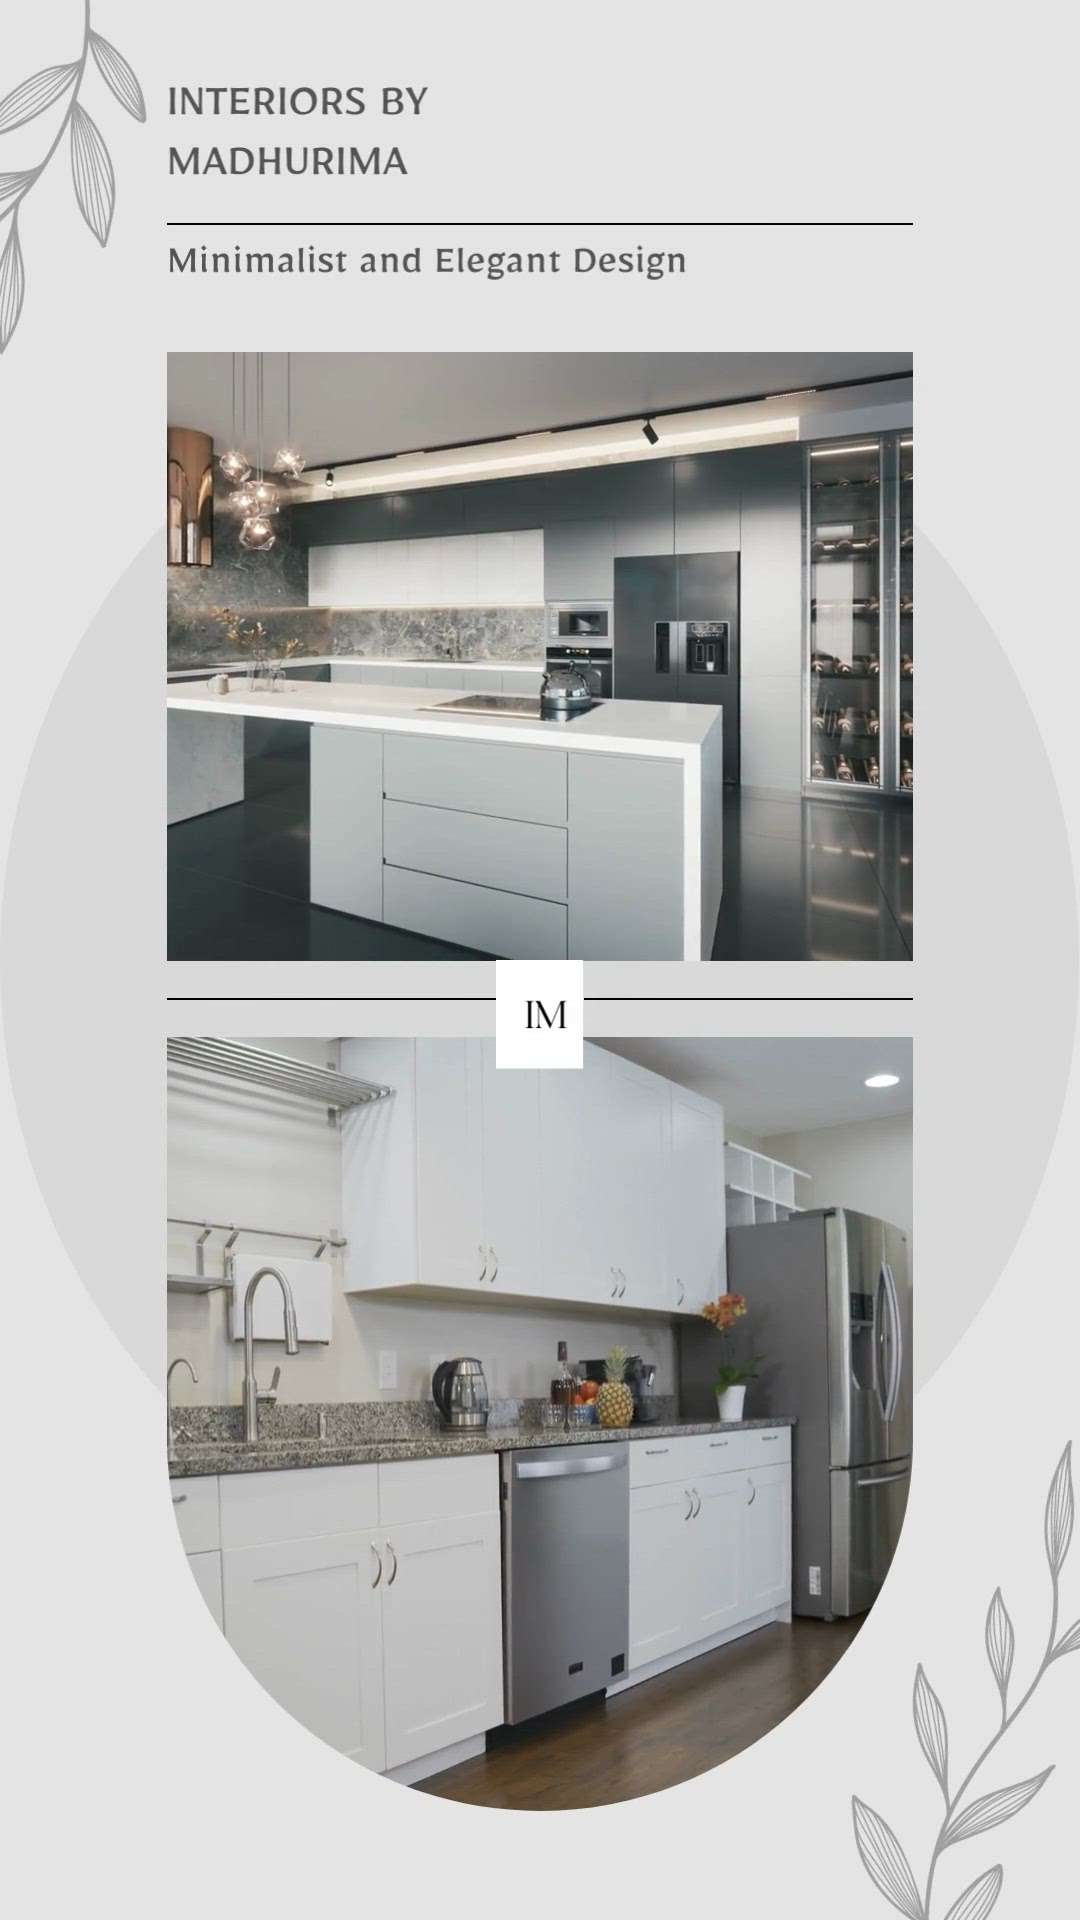 #IMInteriors
#InteriorsbyMadhurima
#Homedesign
#Luxury
#furnituredesign
#kitchen
#bathroom
#livingroom